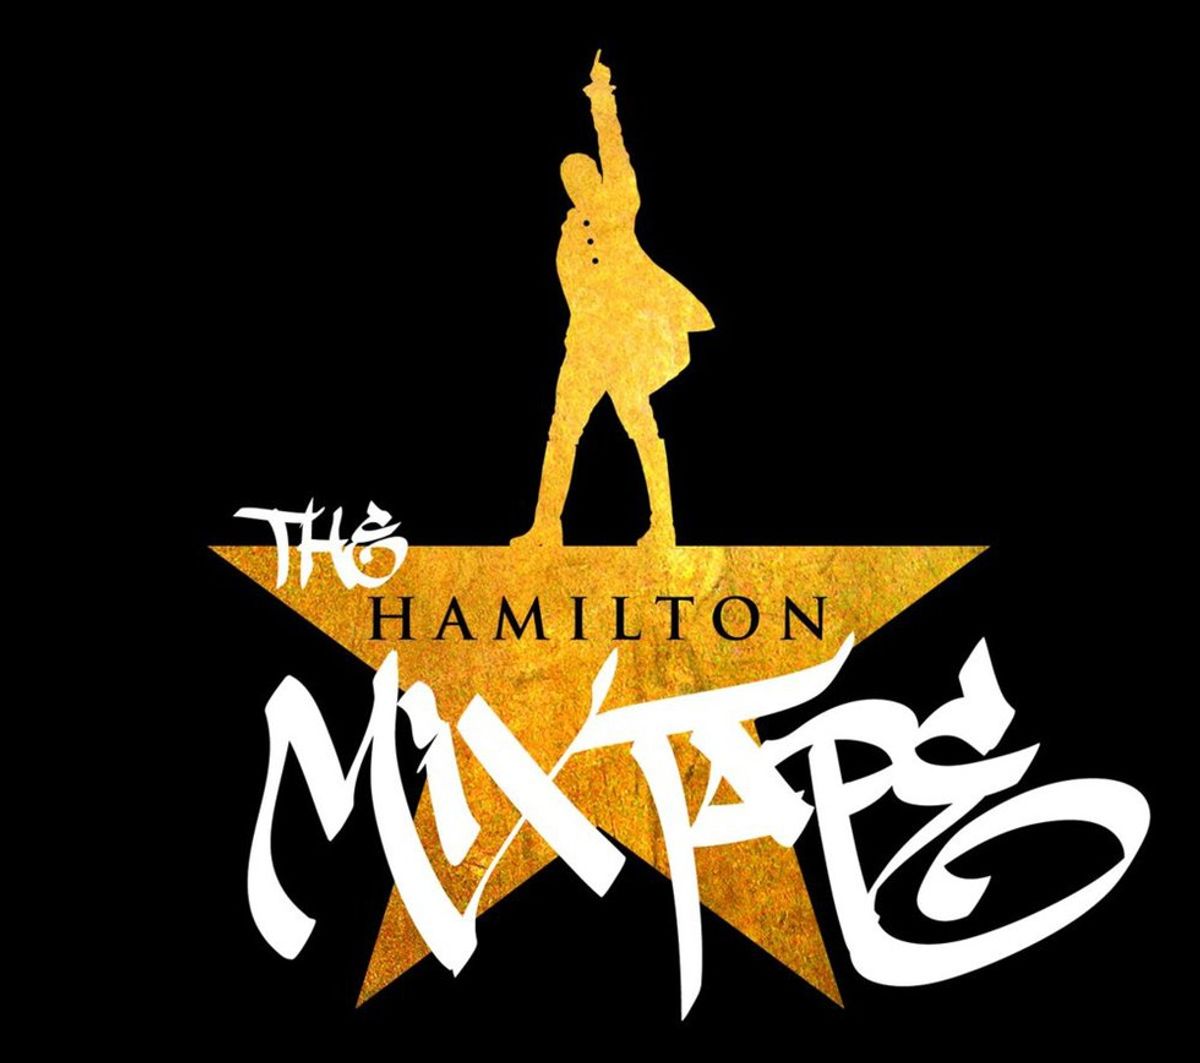 Why You Should Pre-Order "The Hamilton Mixtape" Immediately